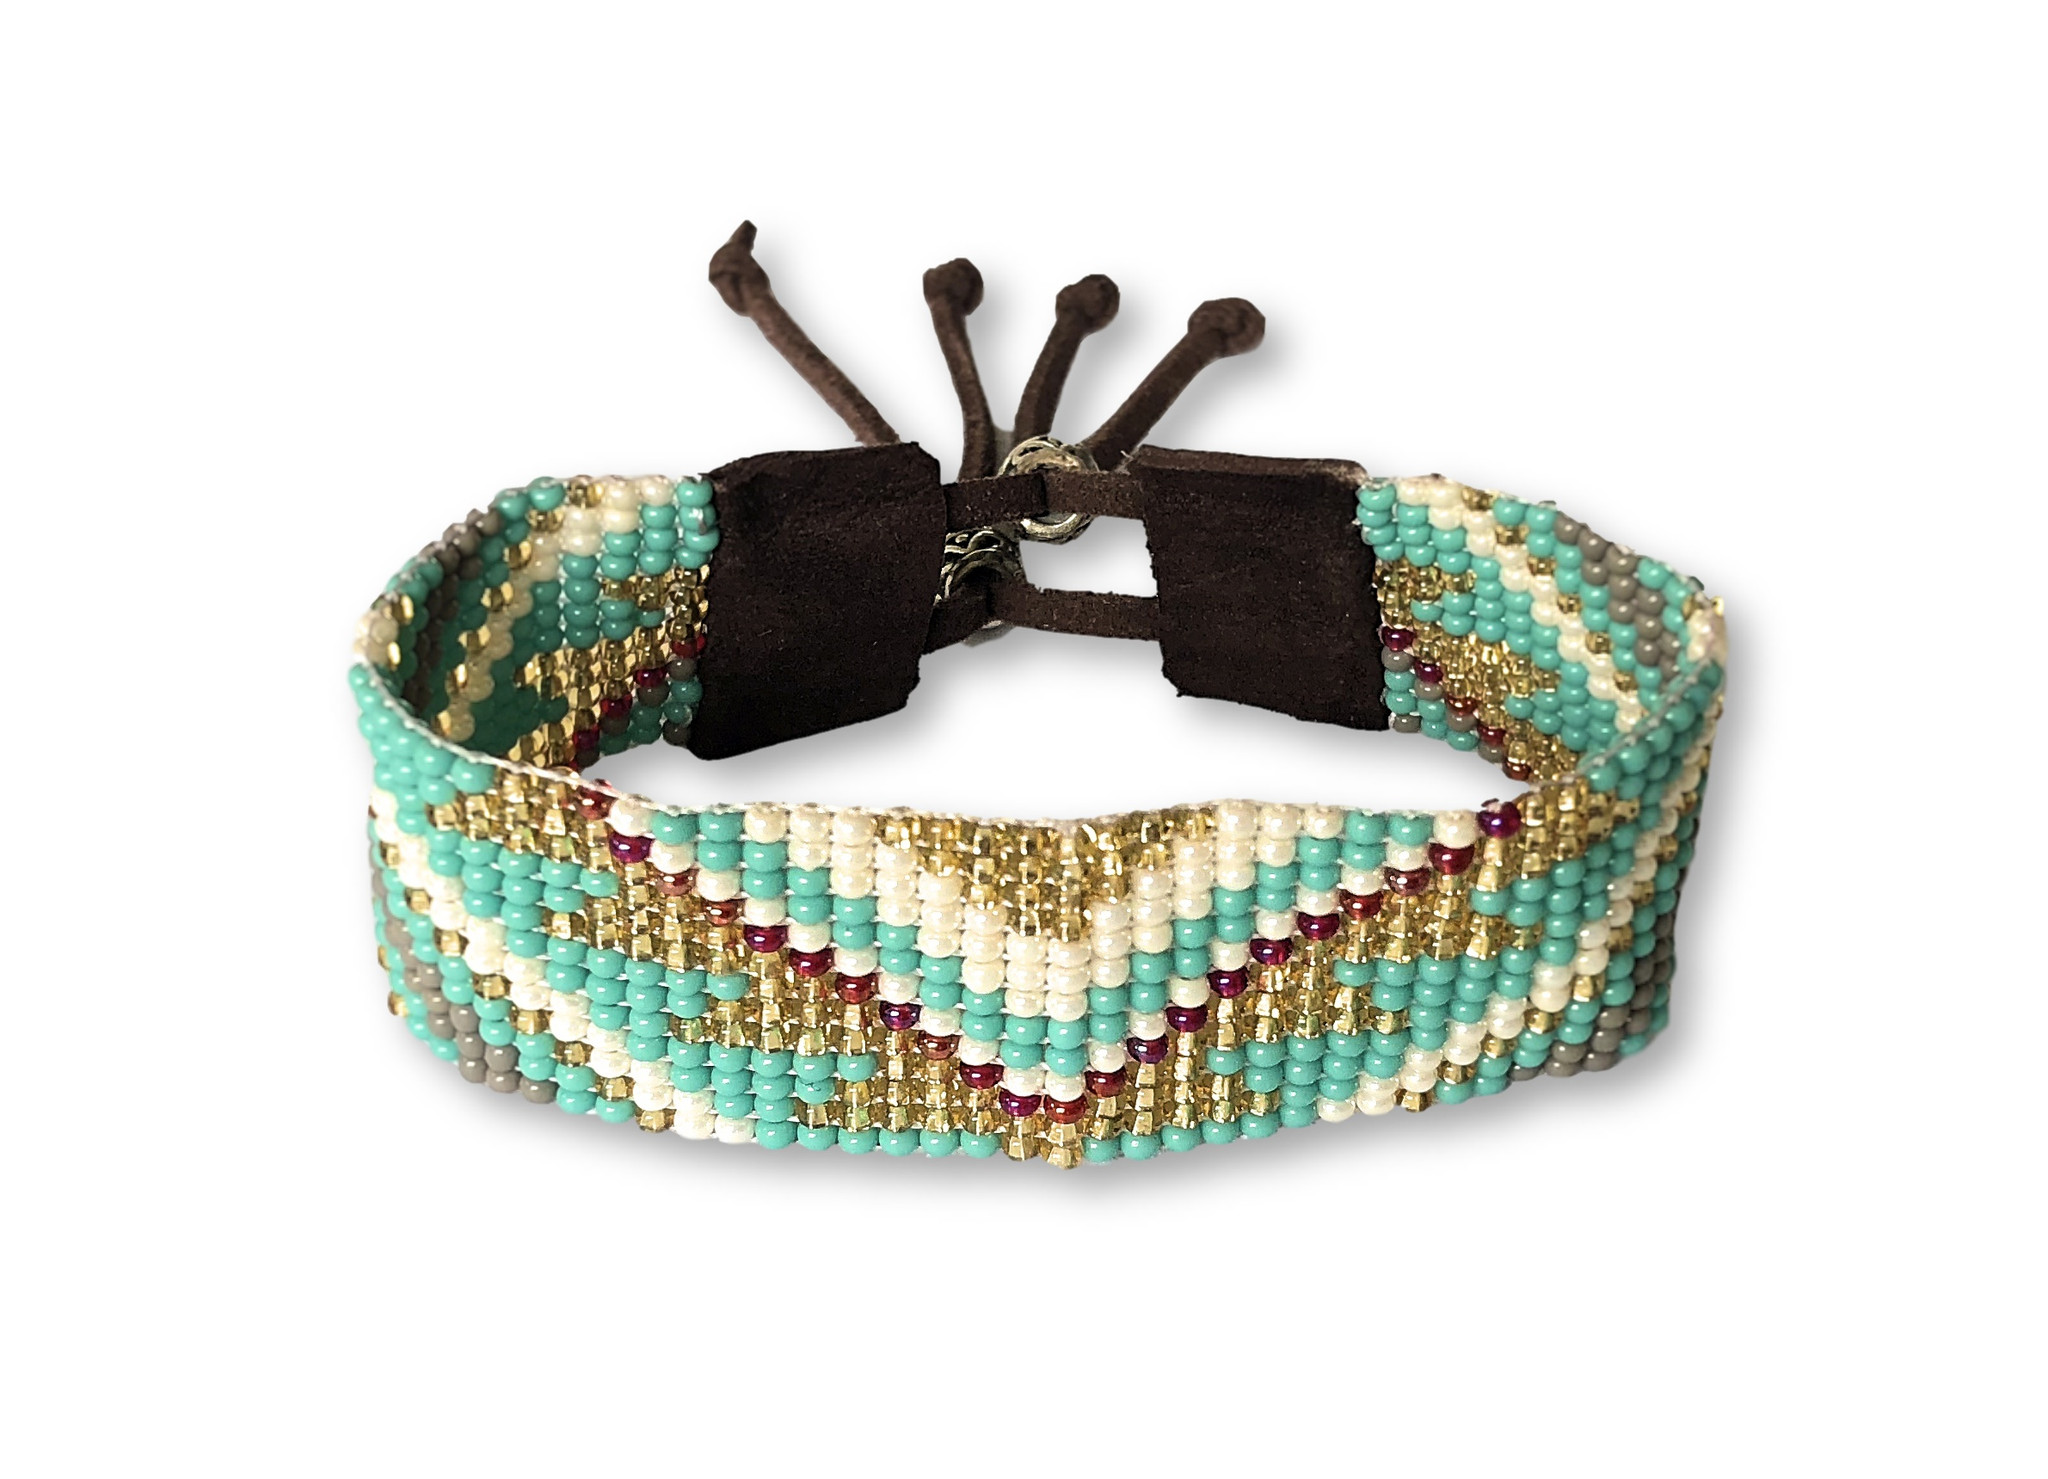 Mayan Jewelry, Bracelets, women's bracelet, fashion accessory, turquoise,  cowgirl, western, leather